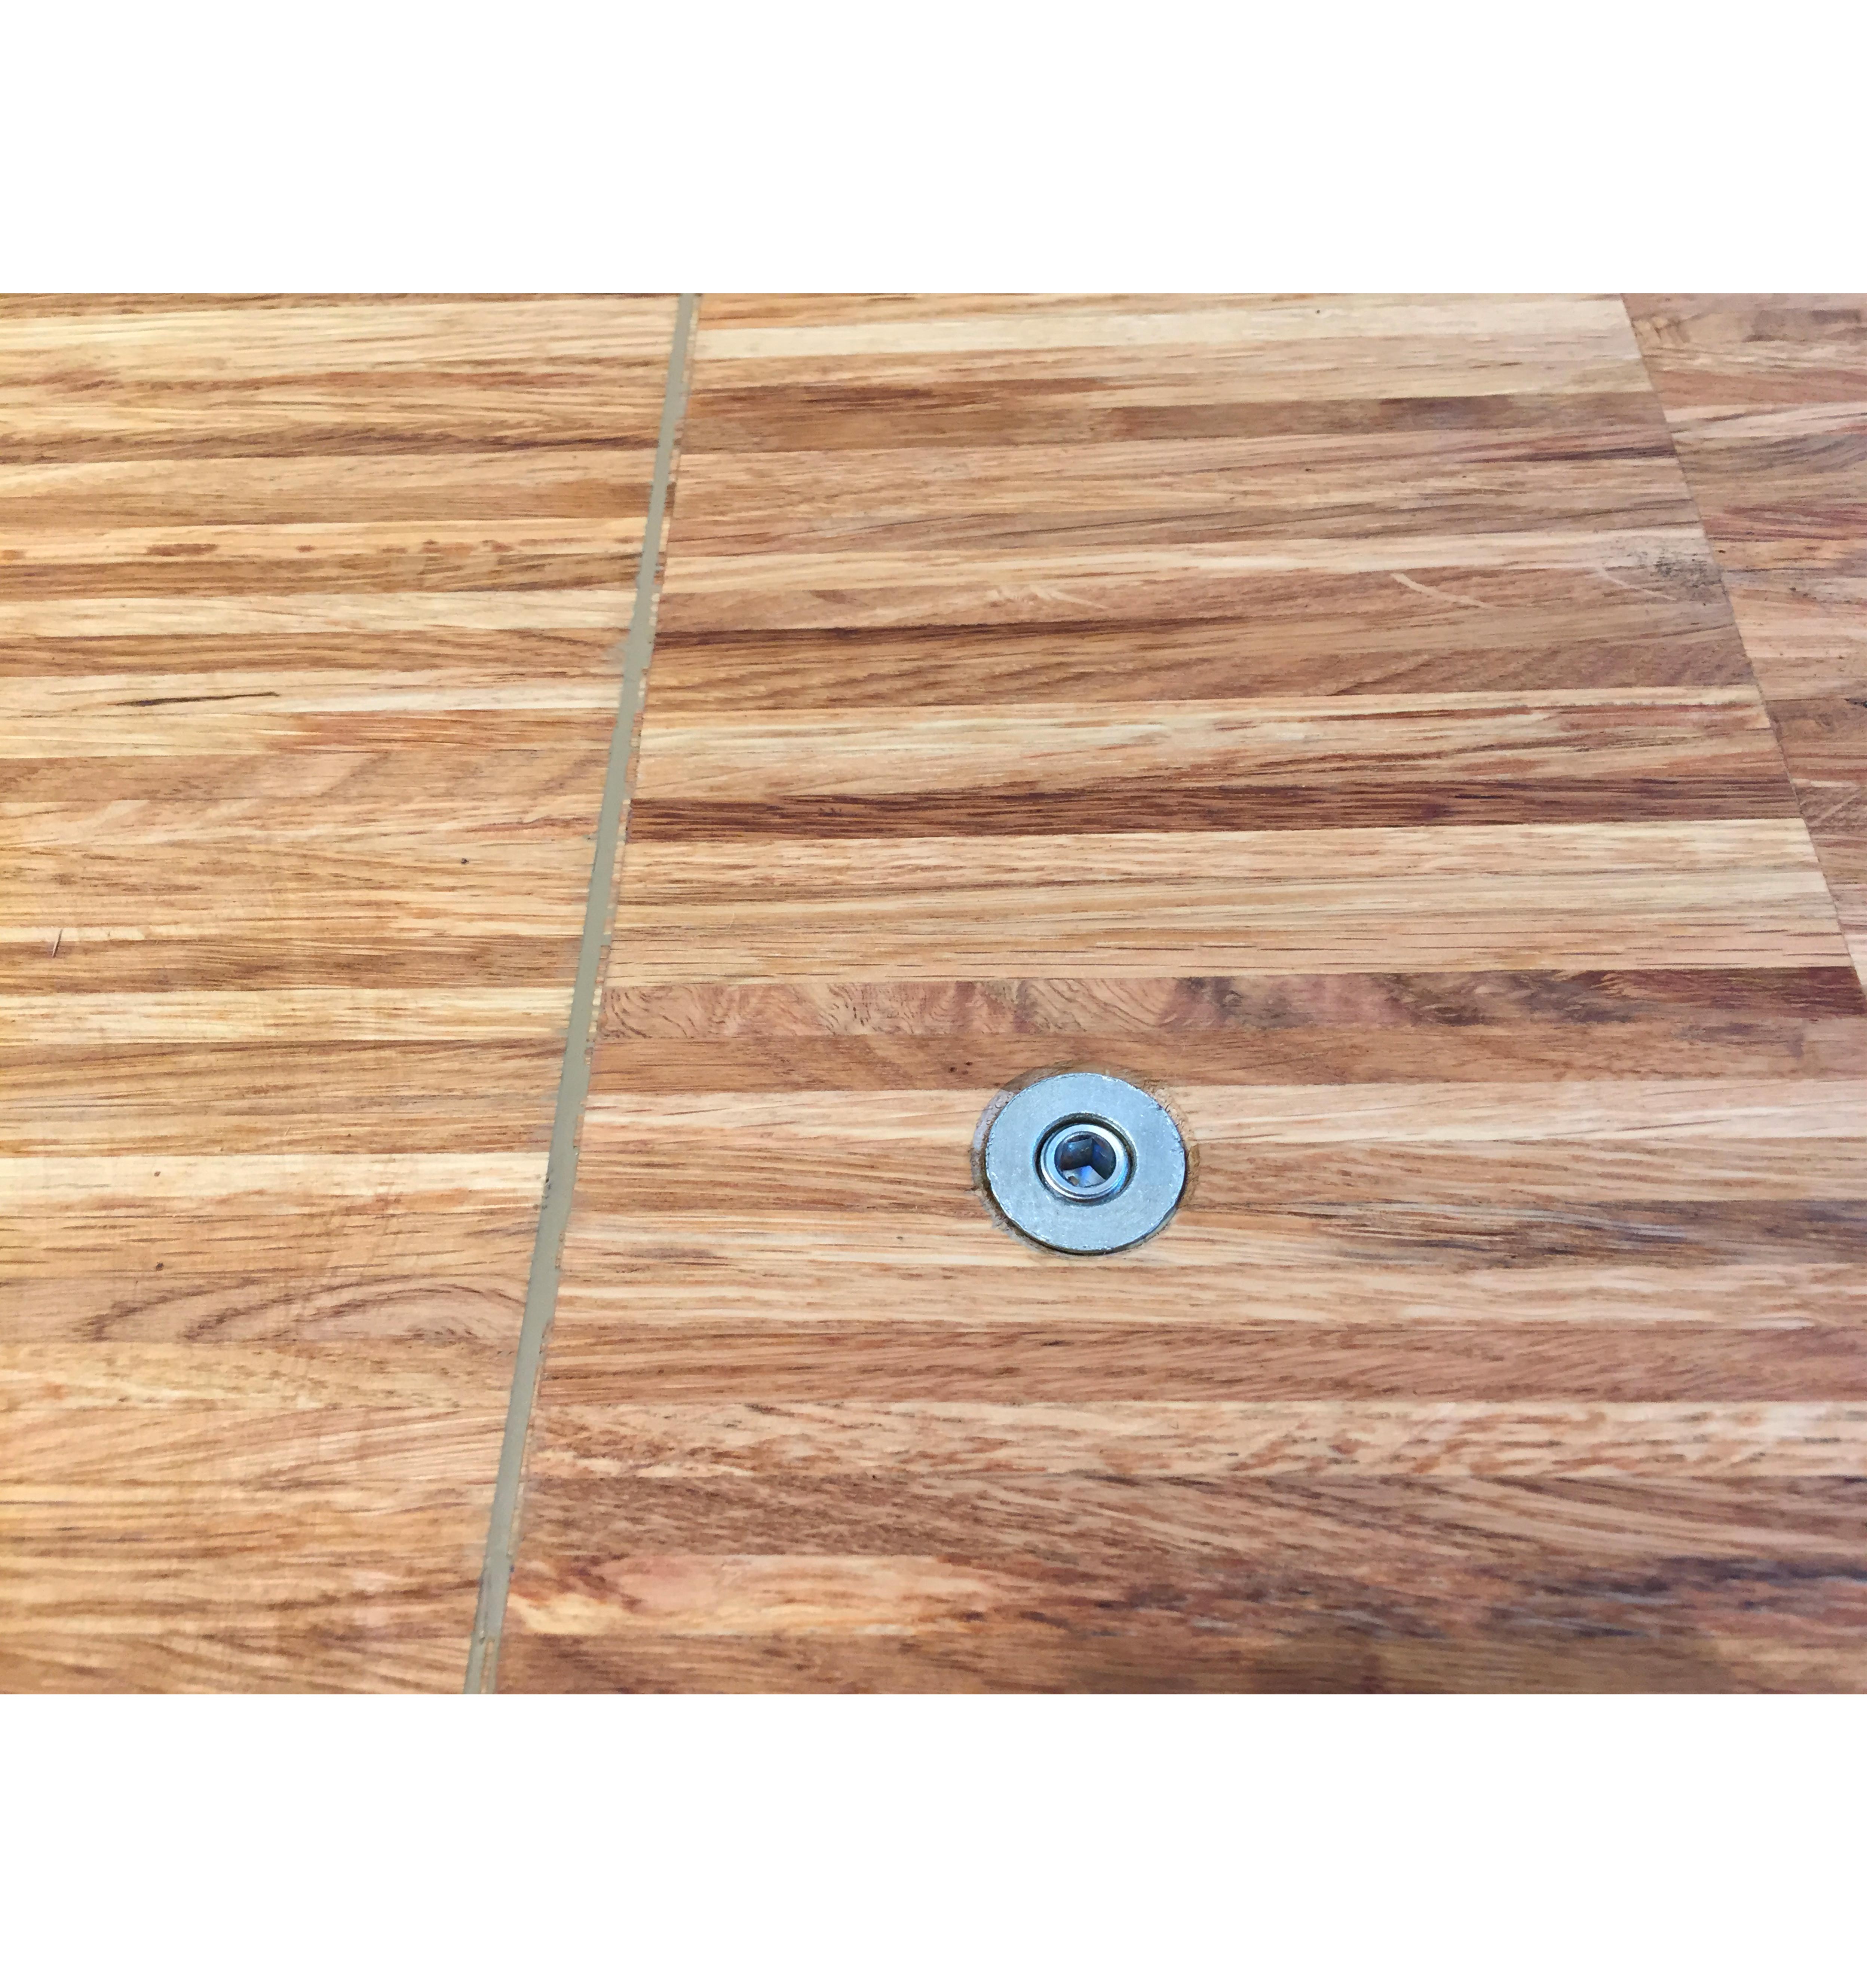 detail of the floor studs